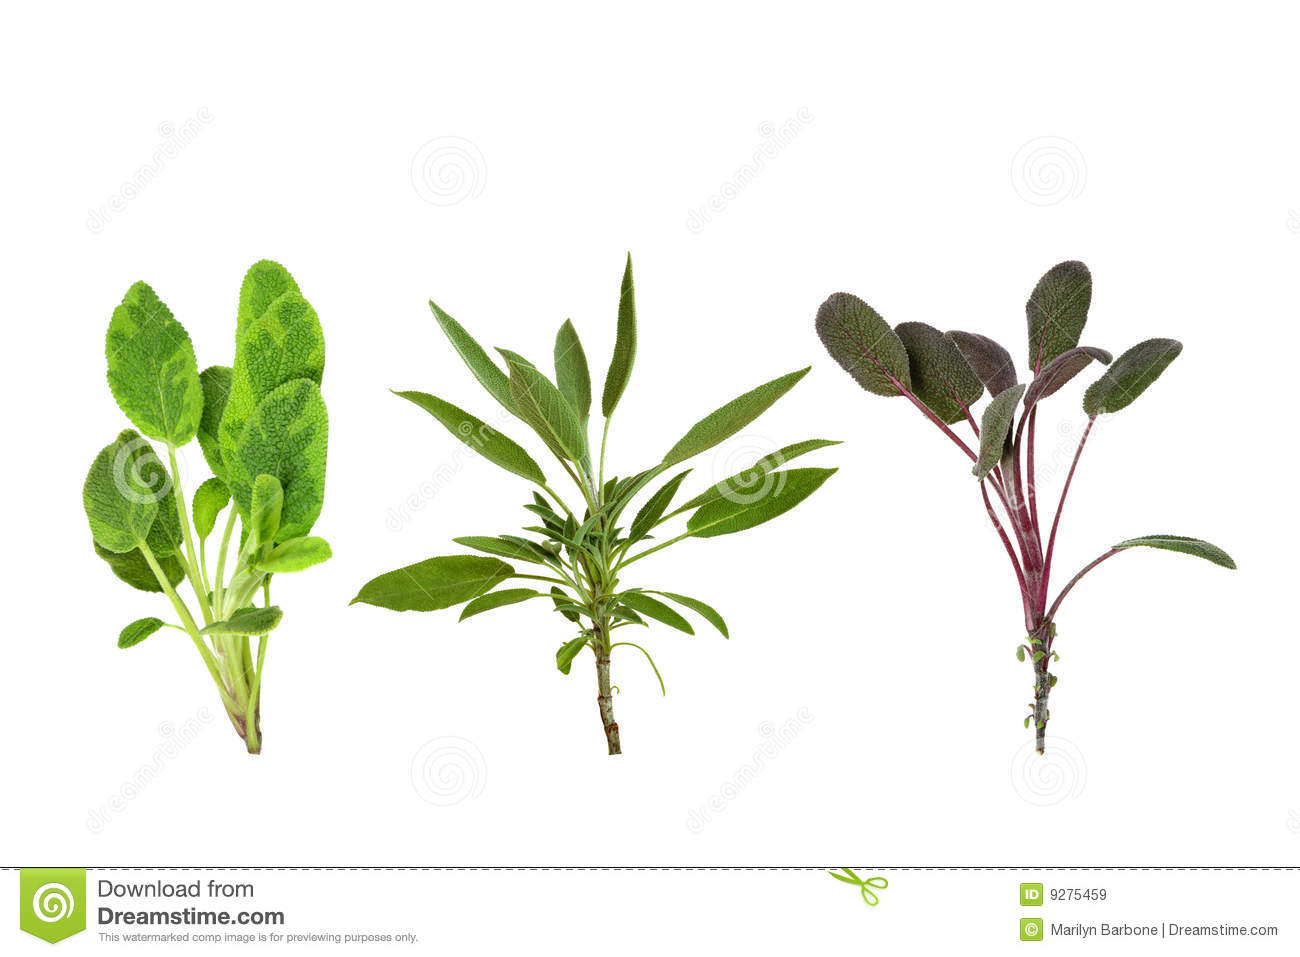 Sage Herb Leaf Variety Royalty Free Stock Images   Image  9275459